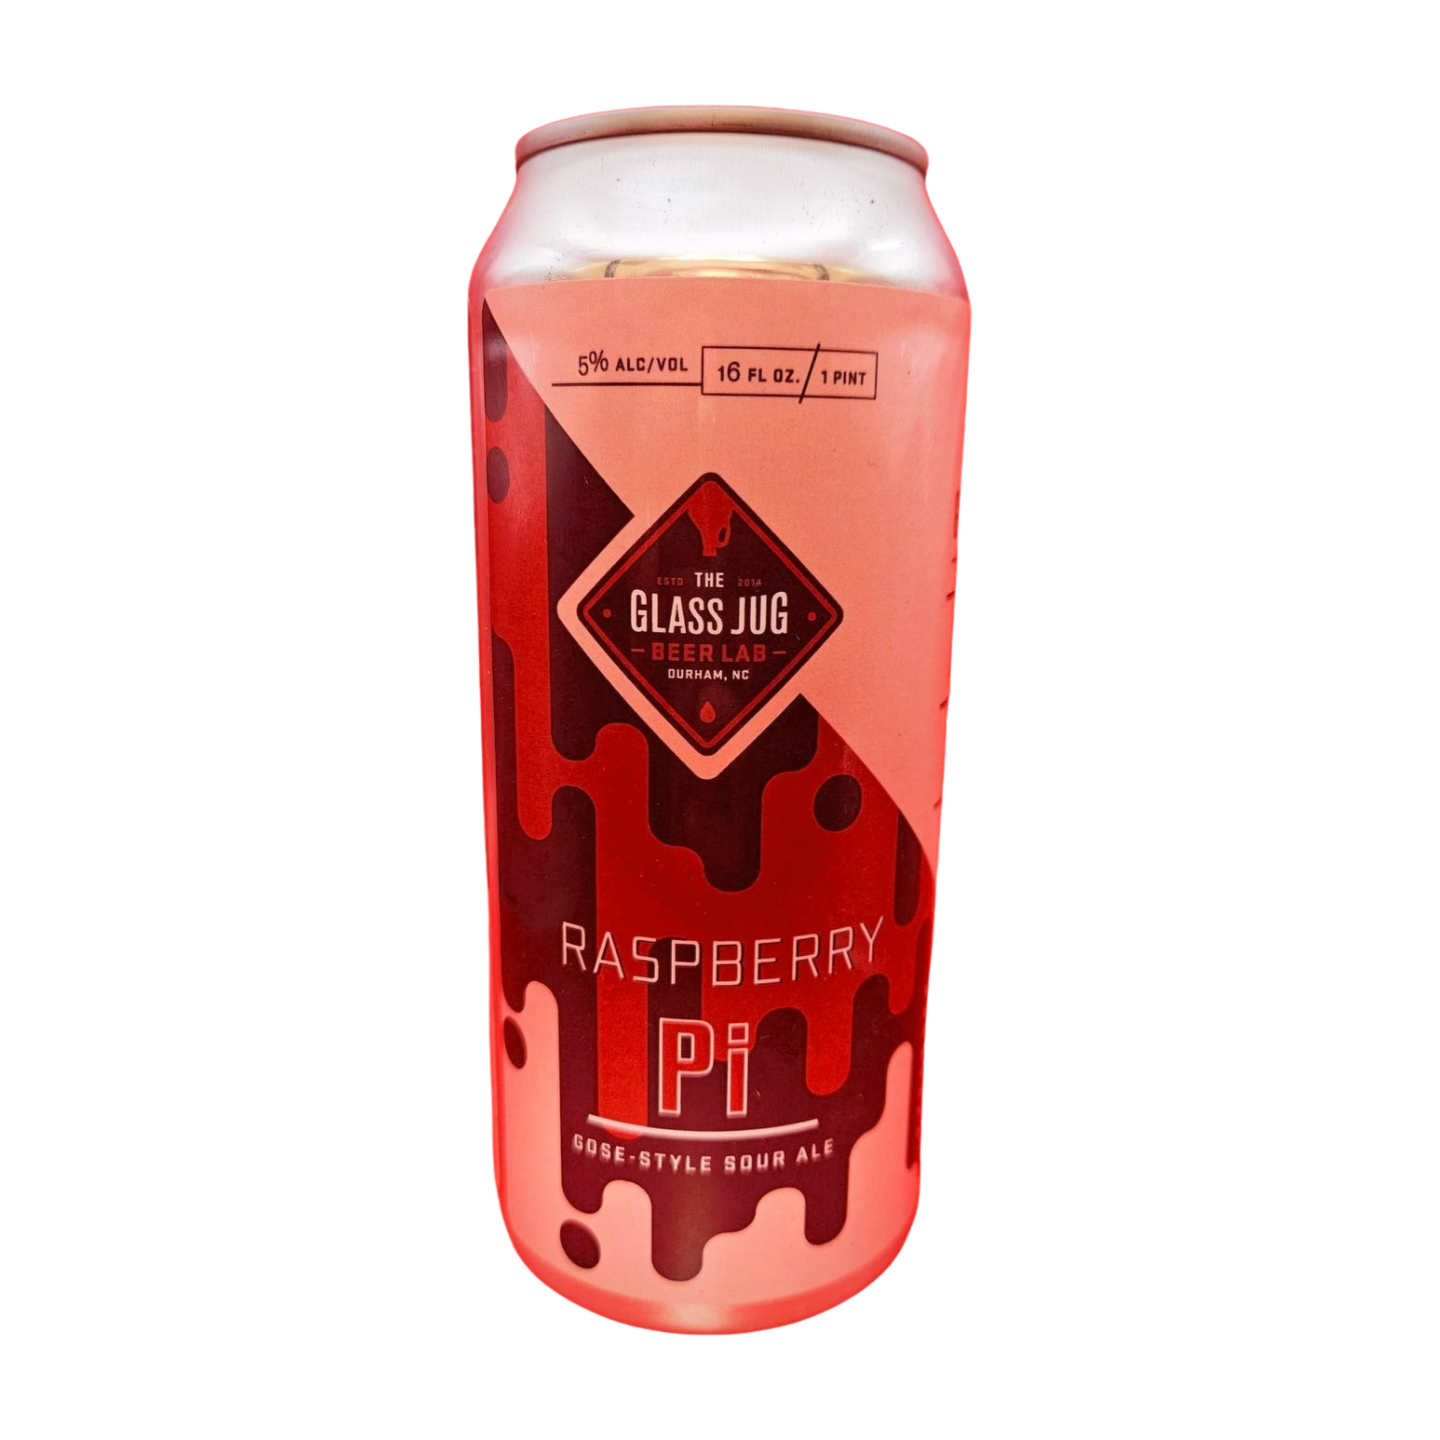 Raspberry Pi, 16 oz cans, 4 pack